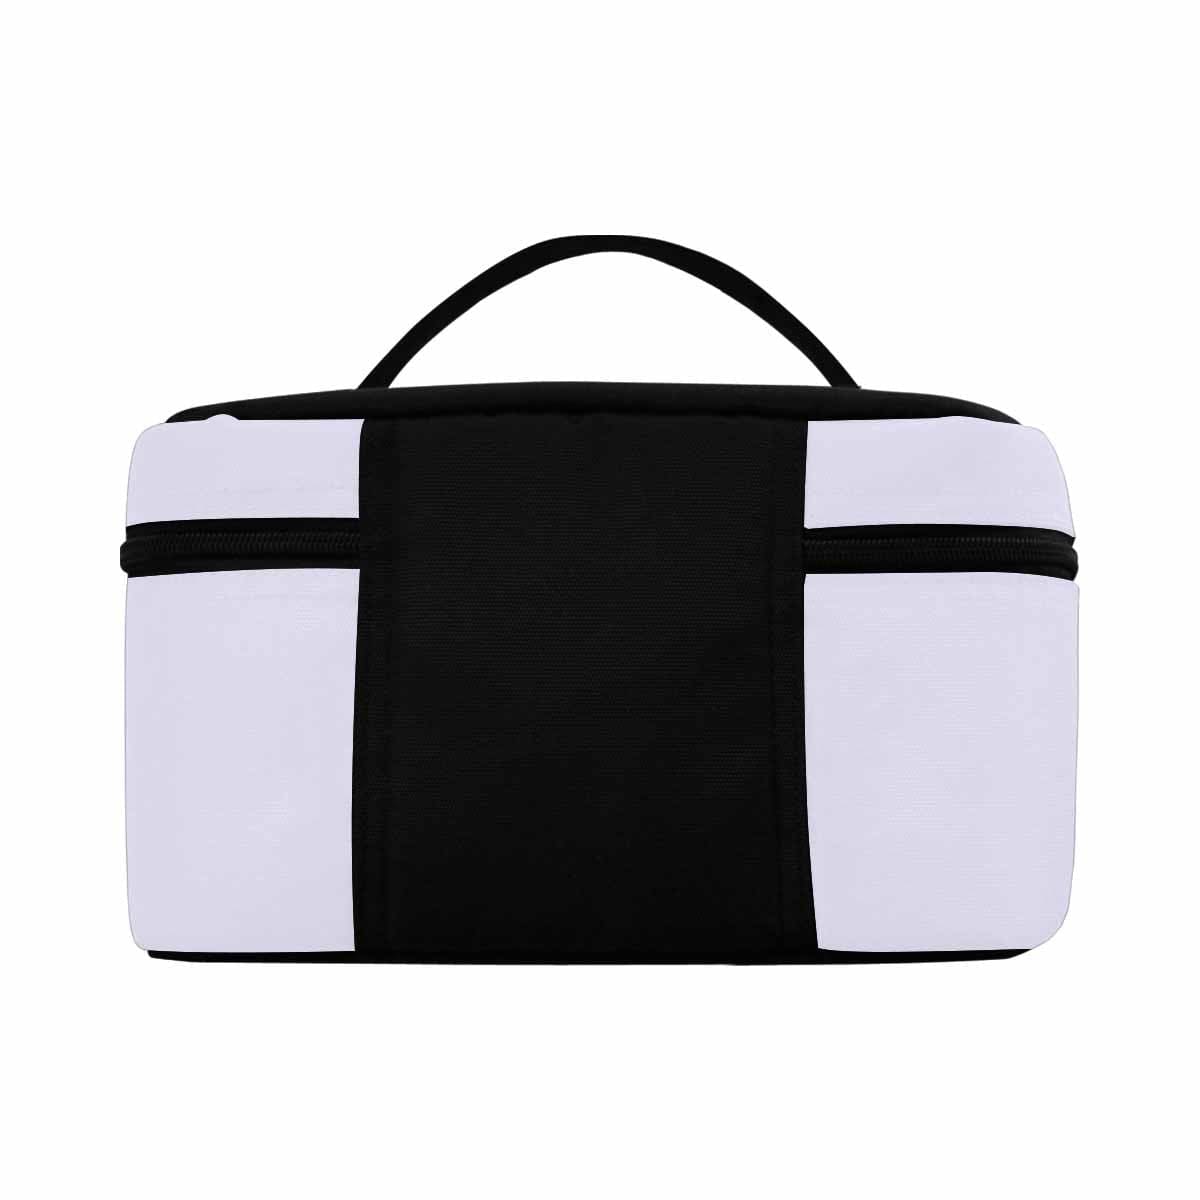 Cosmetic Bag Lavender Purple Travel Case - Bags | Cosmetic Bags